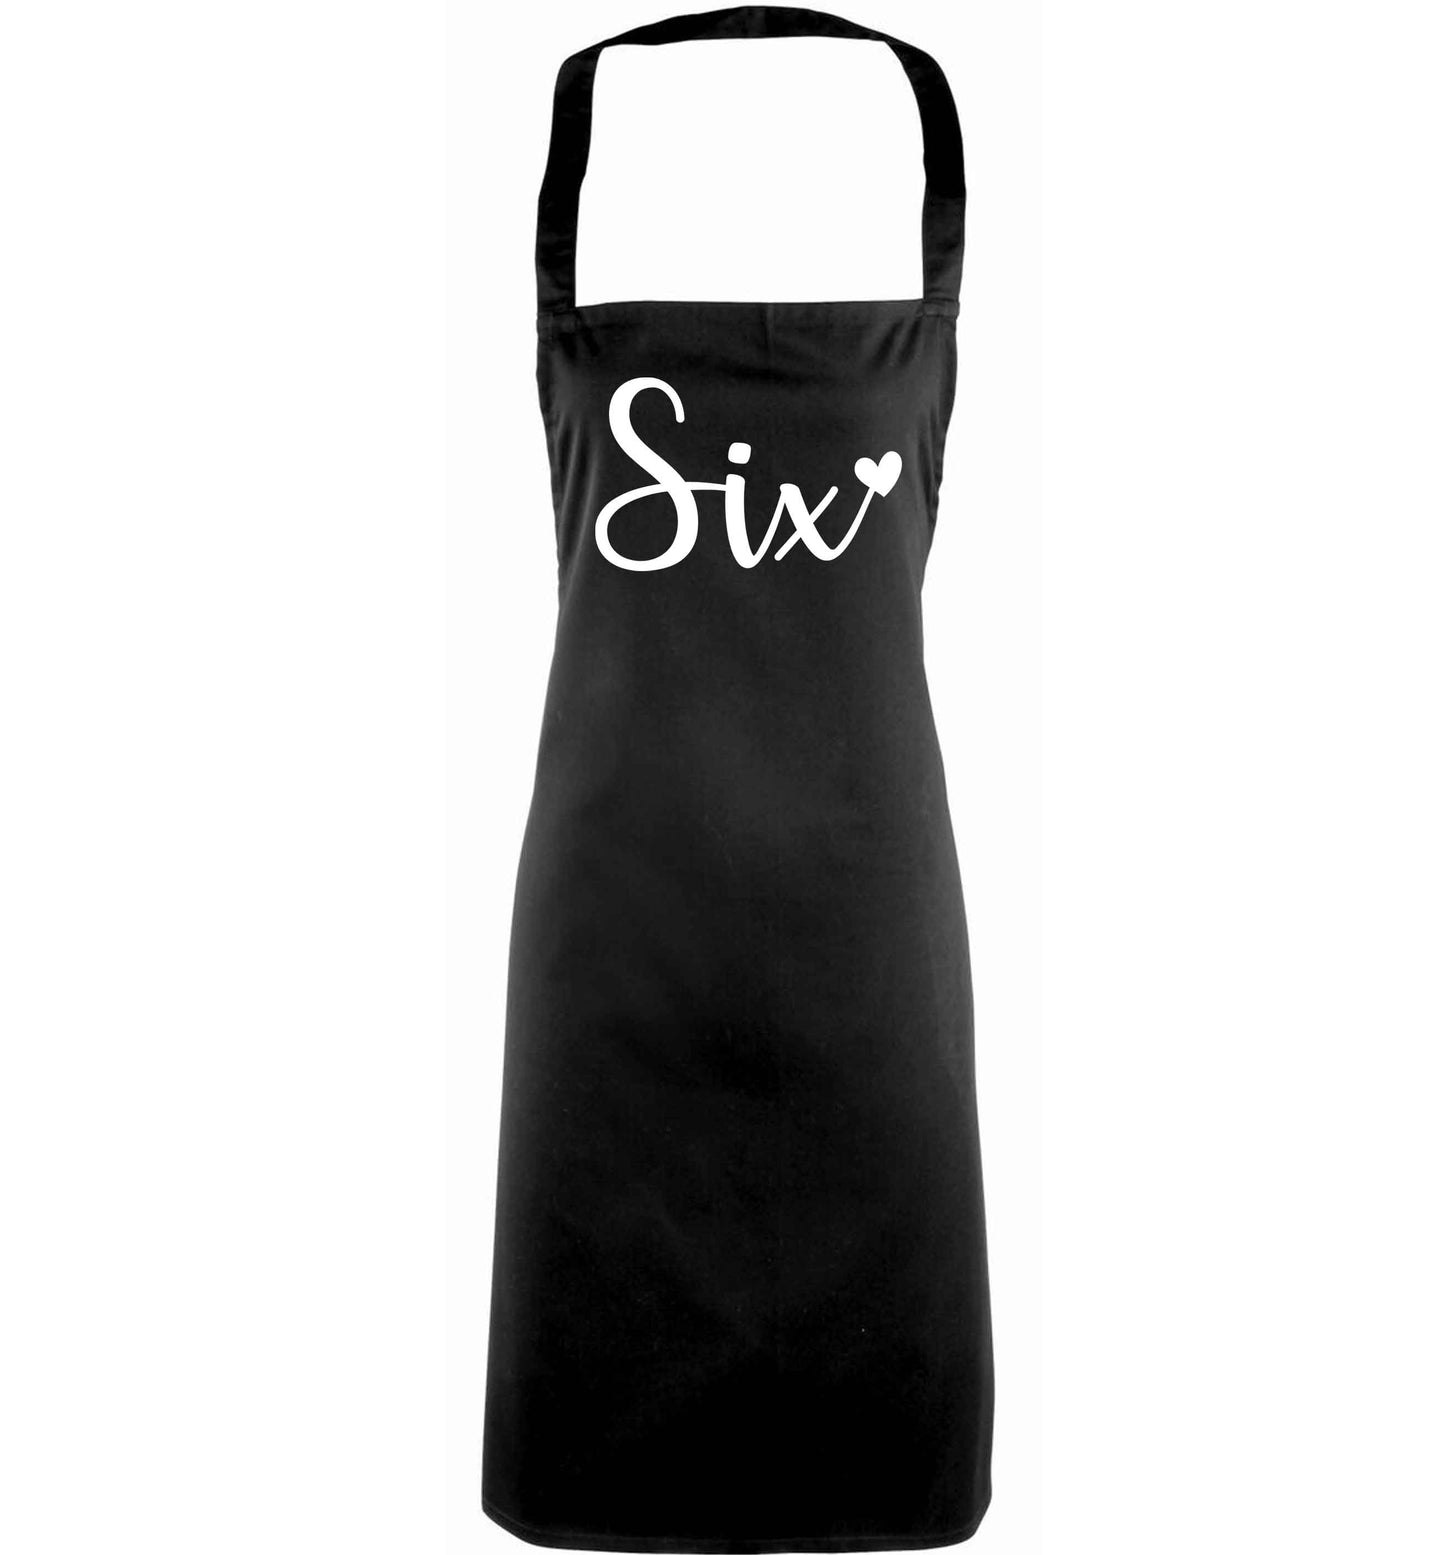 Six and heart! adults black apron